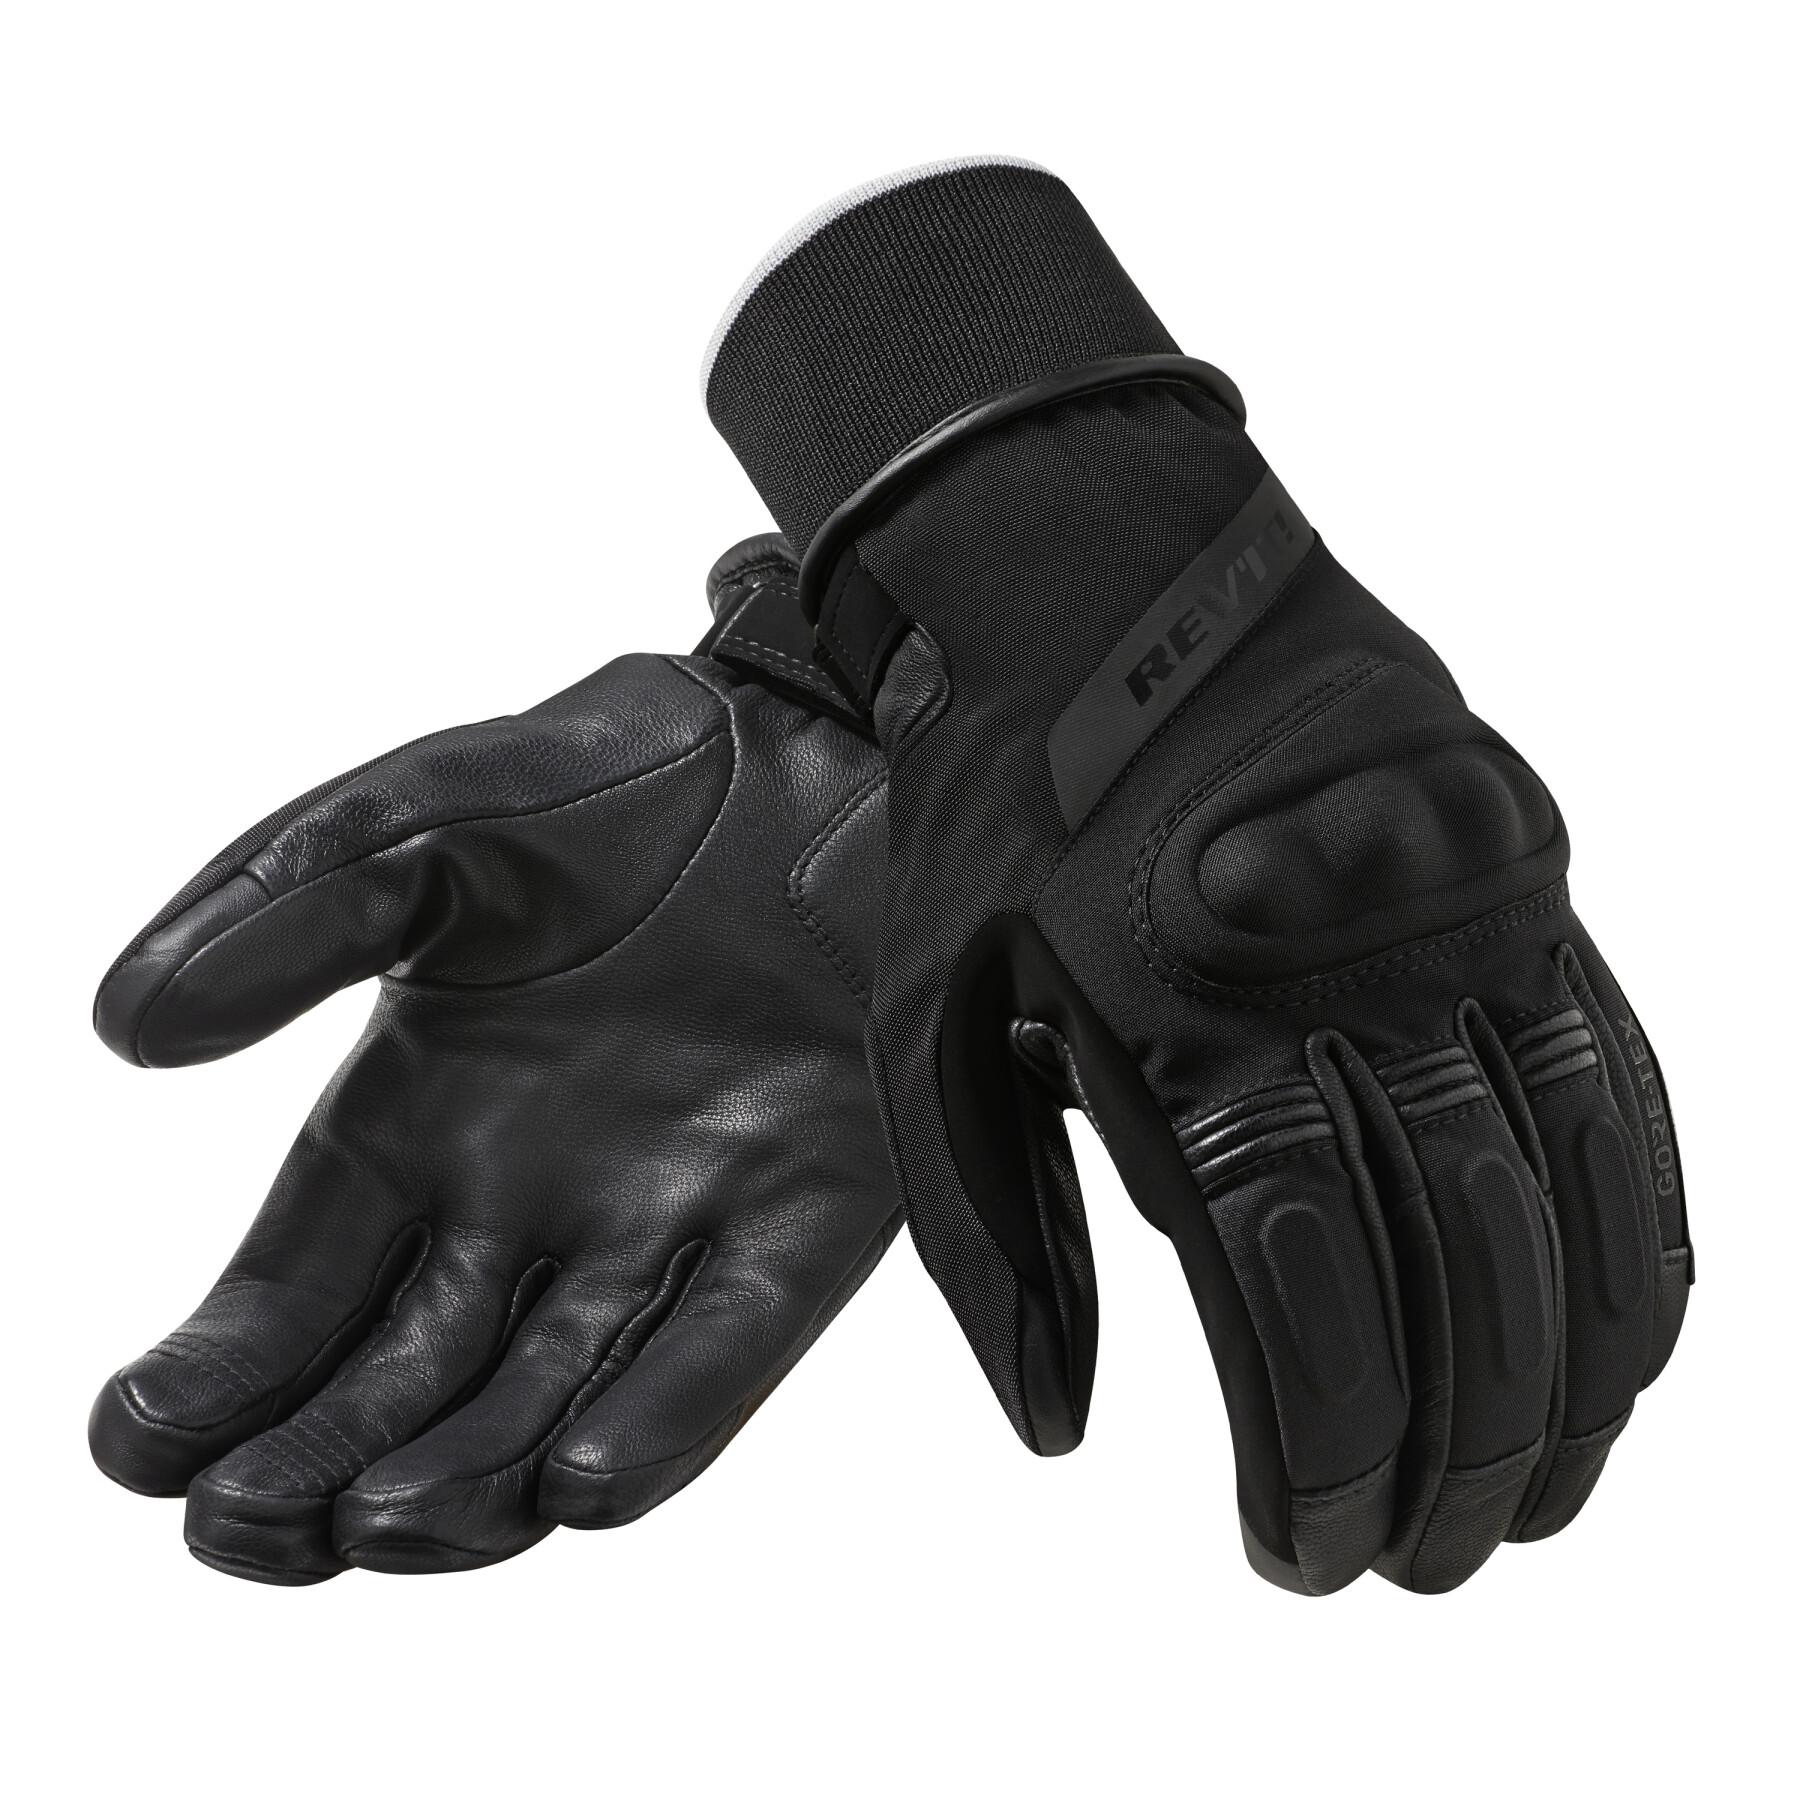 Winter motorcycle gloves Rev'it kryptonite 2 GTX